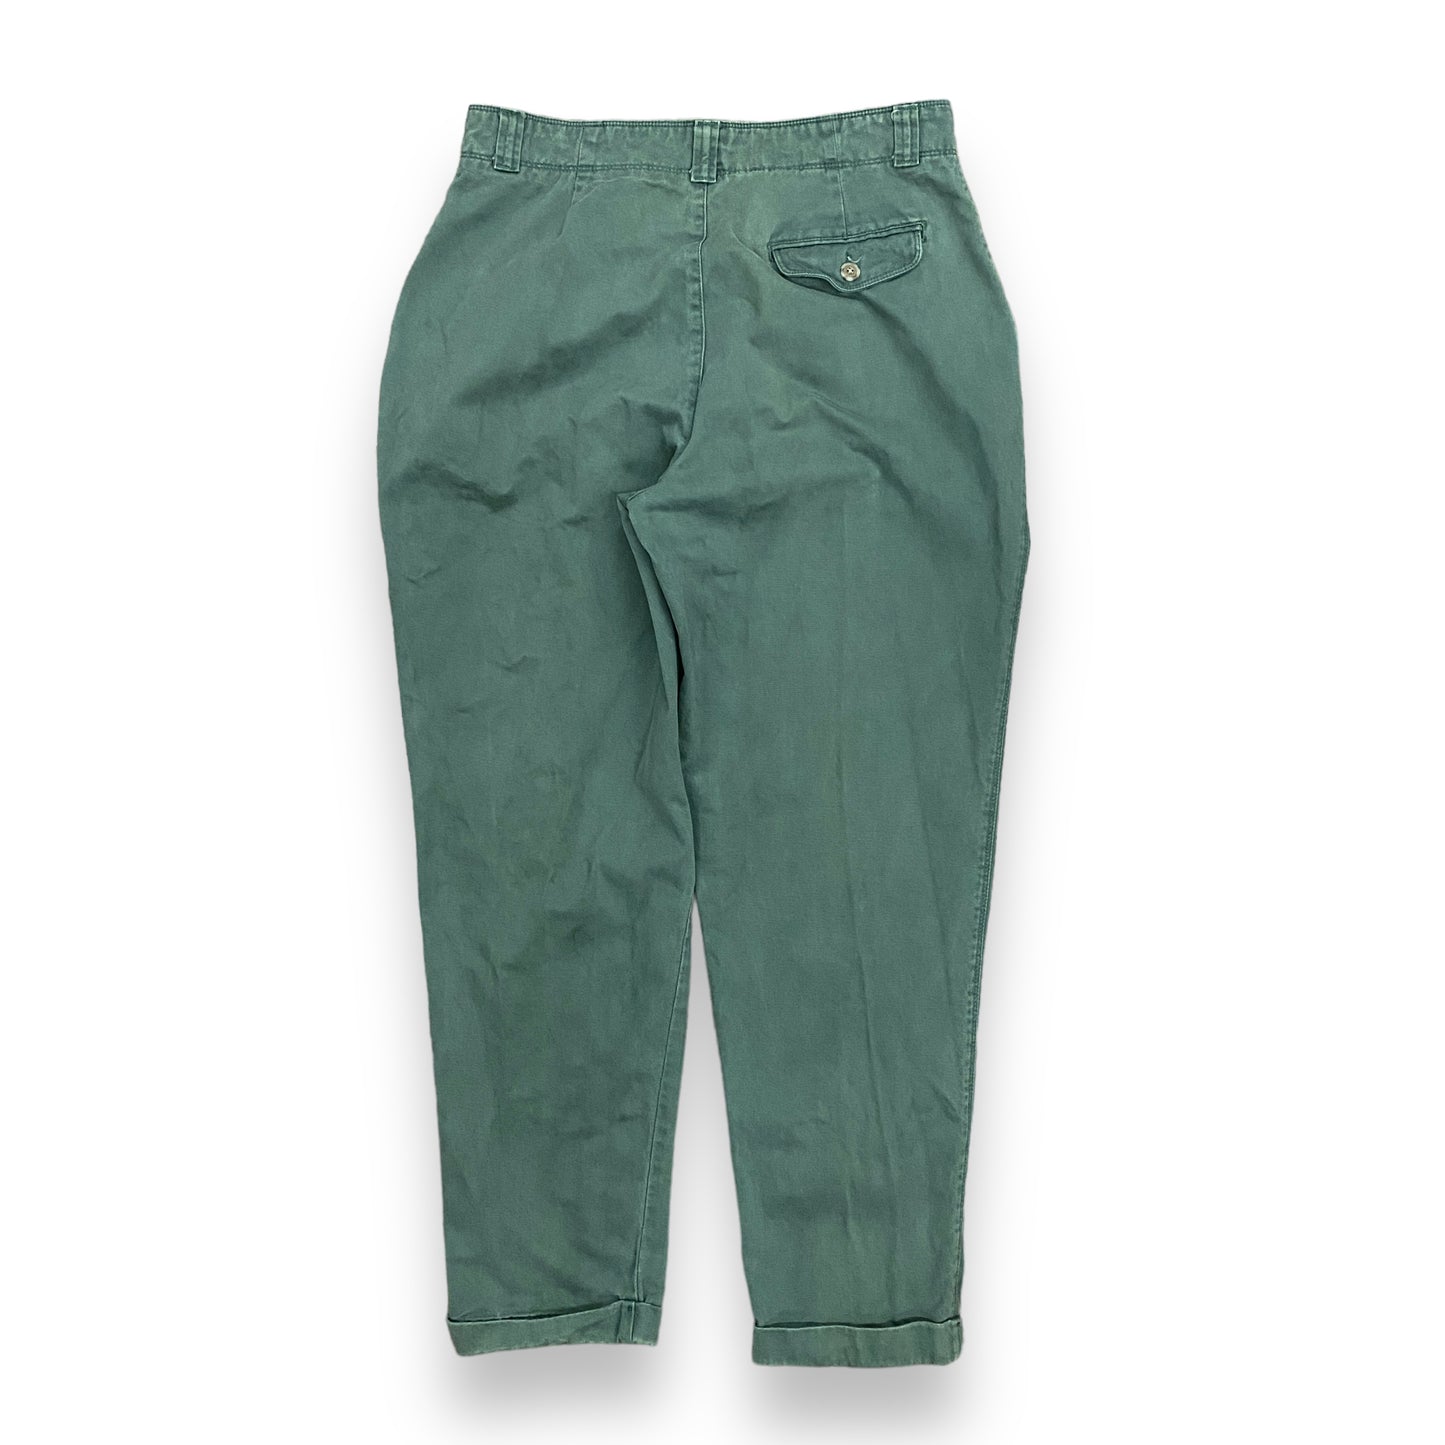 1990s LL Bean Green Cotton Pants - 32"x30"